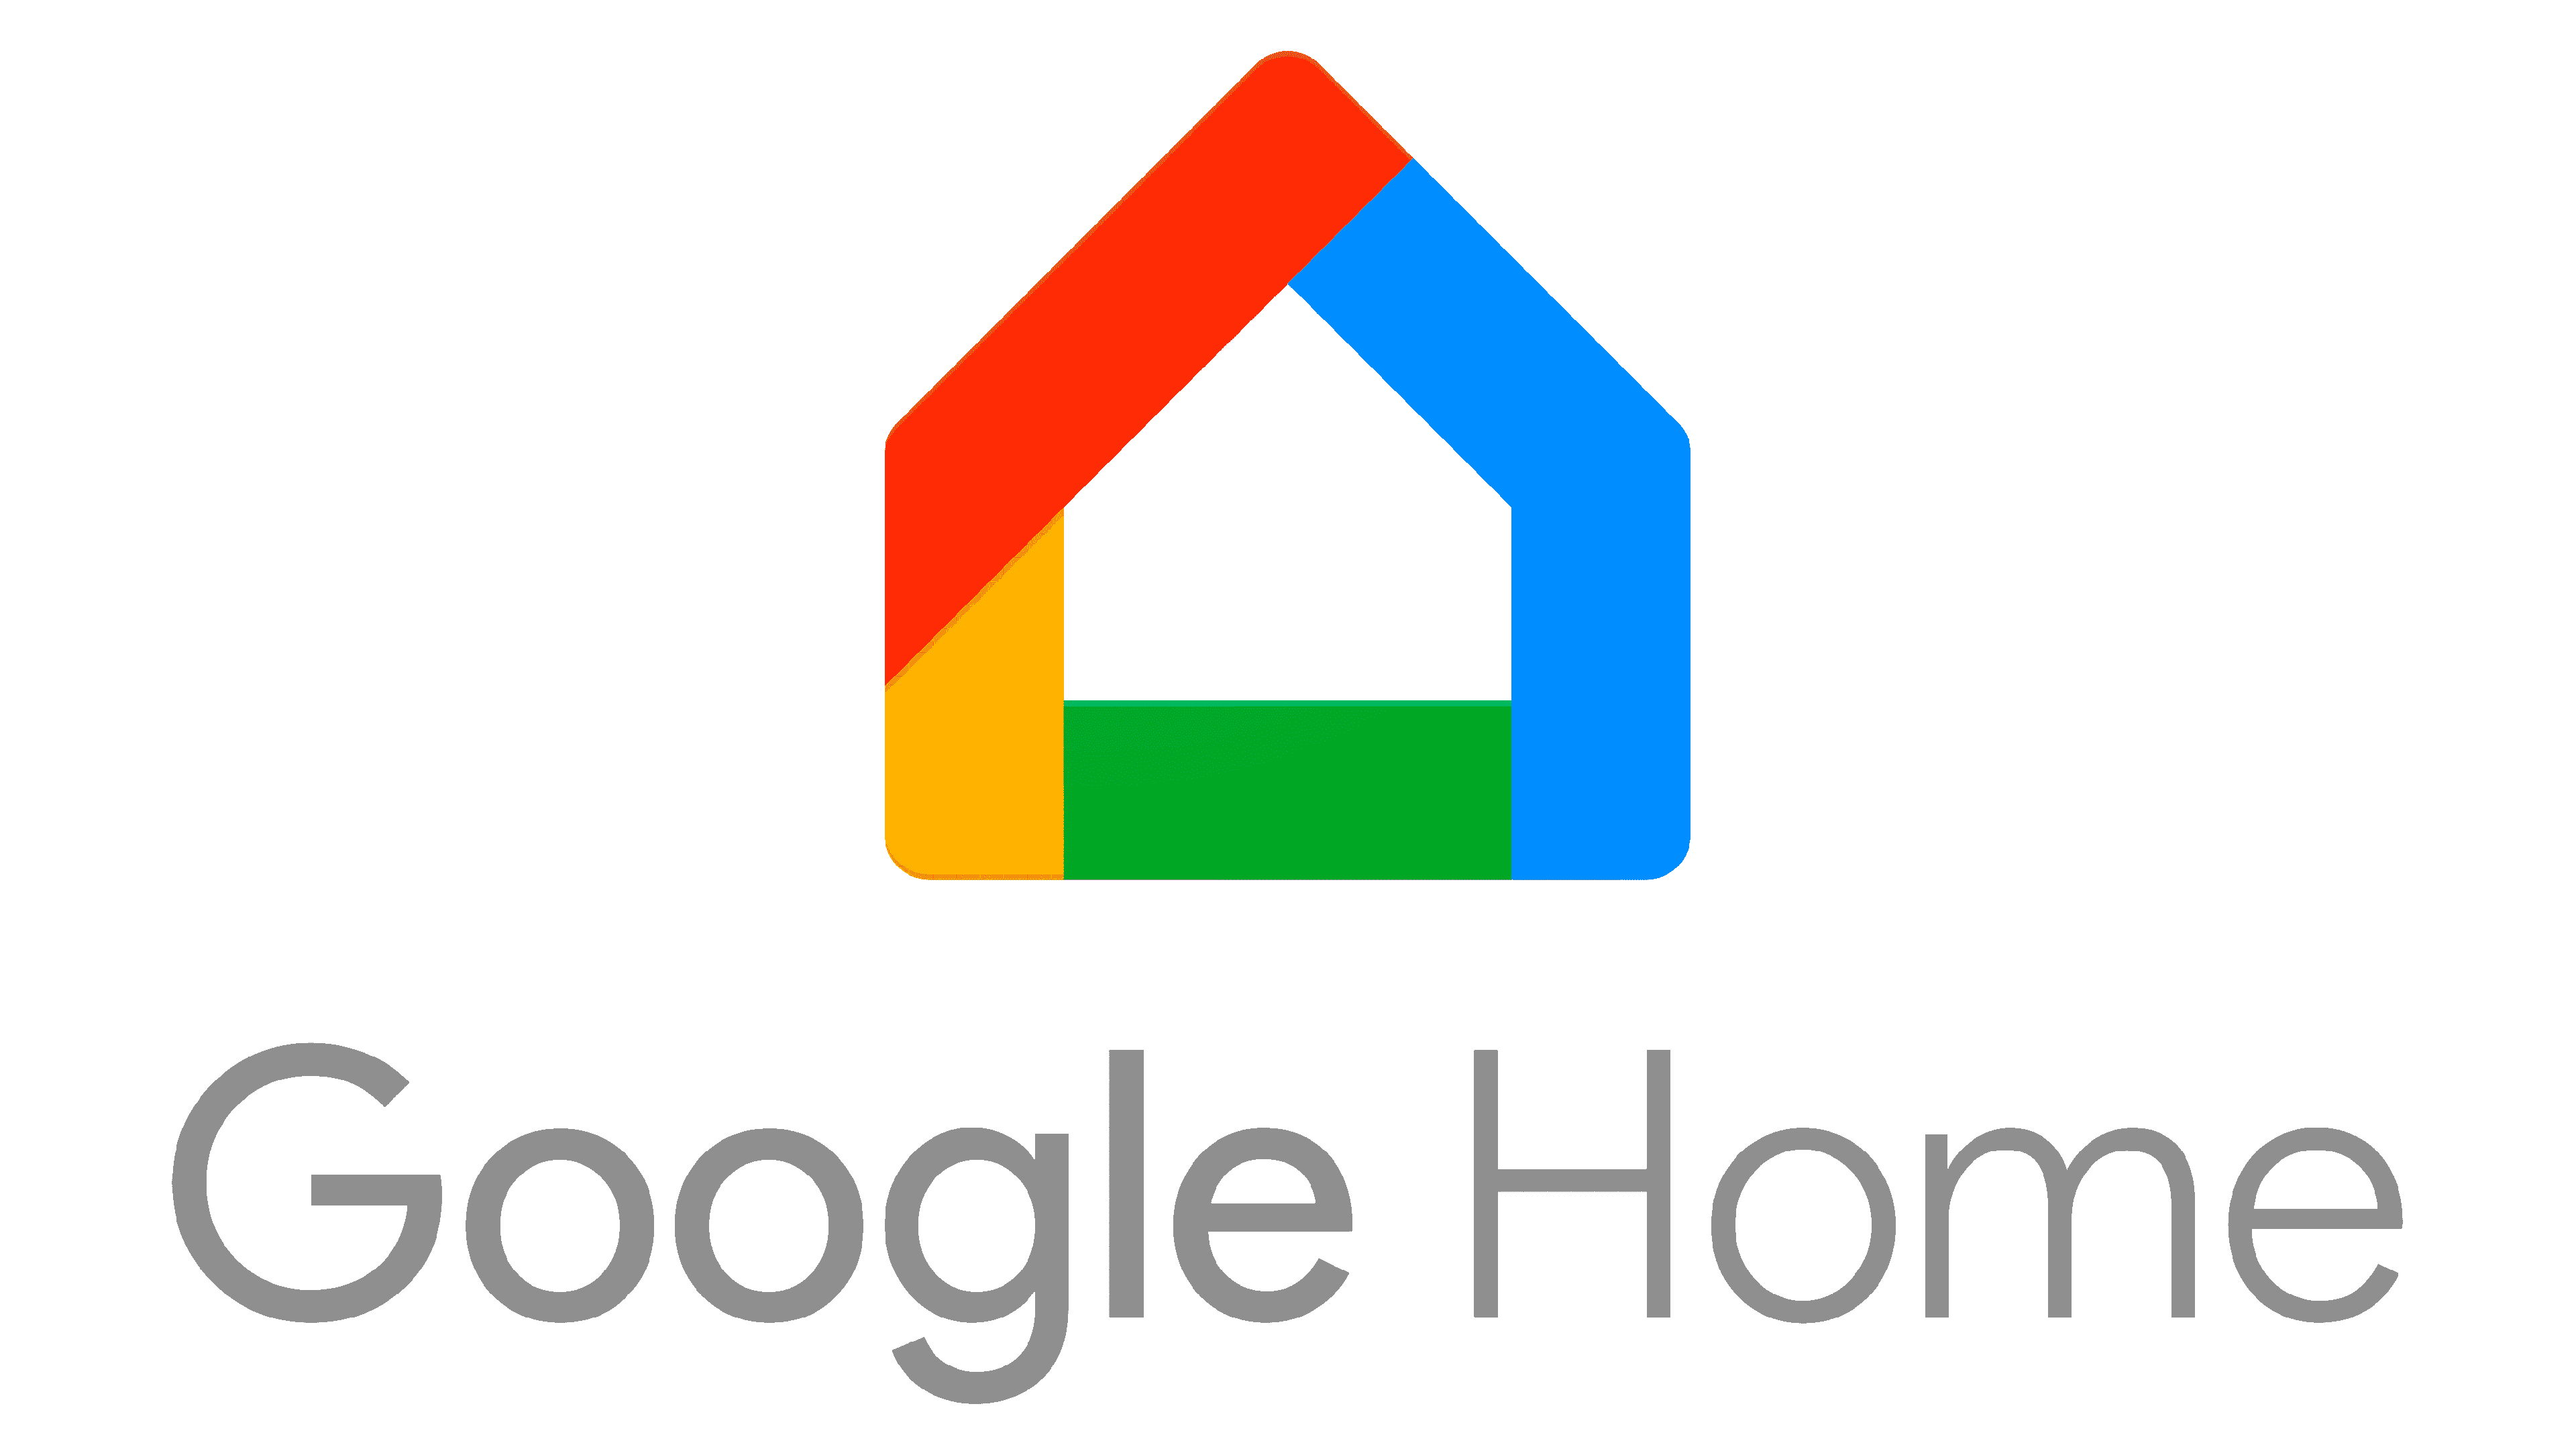 https://1000logos.net/wp-content/uploads/2021/12/Google-Home-Logo.png